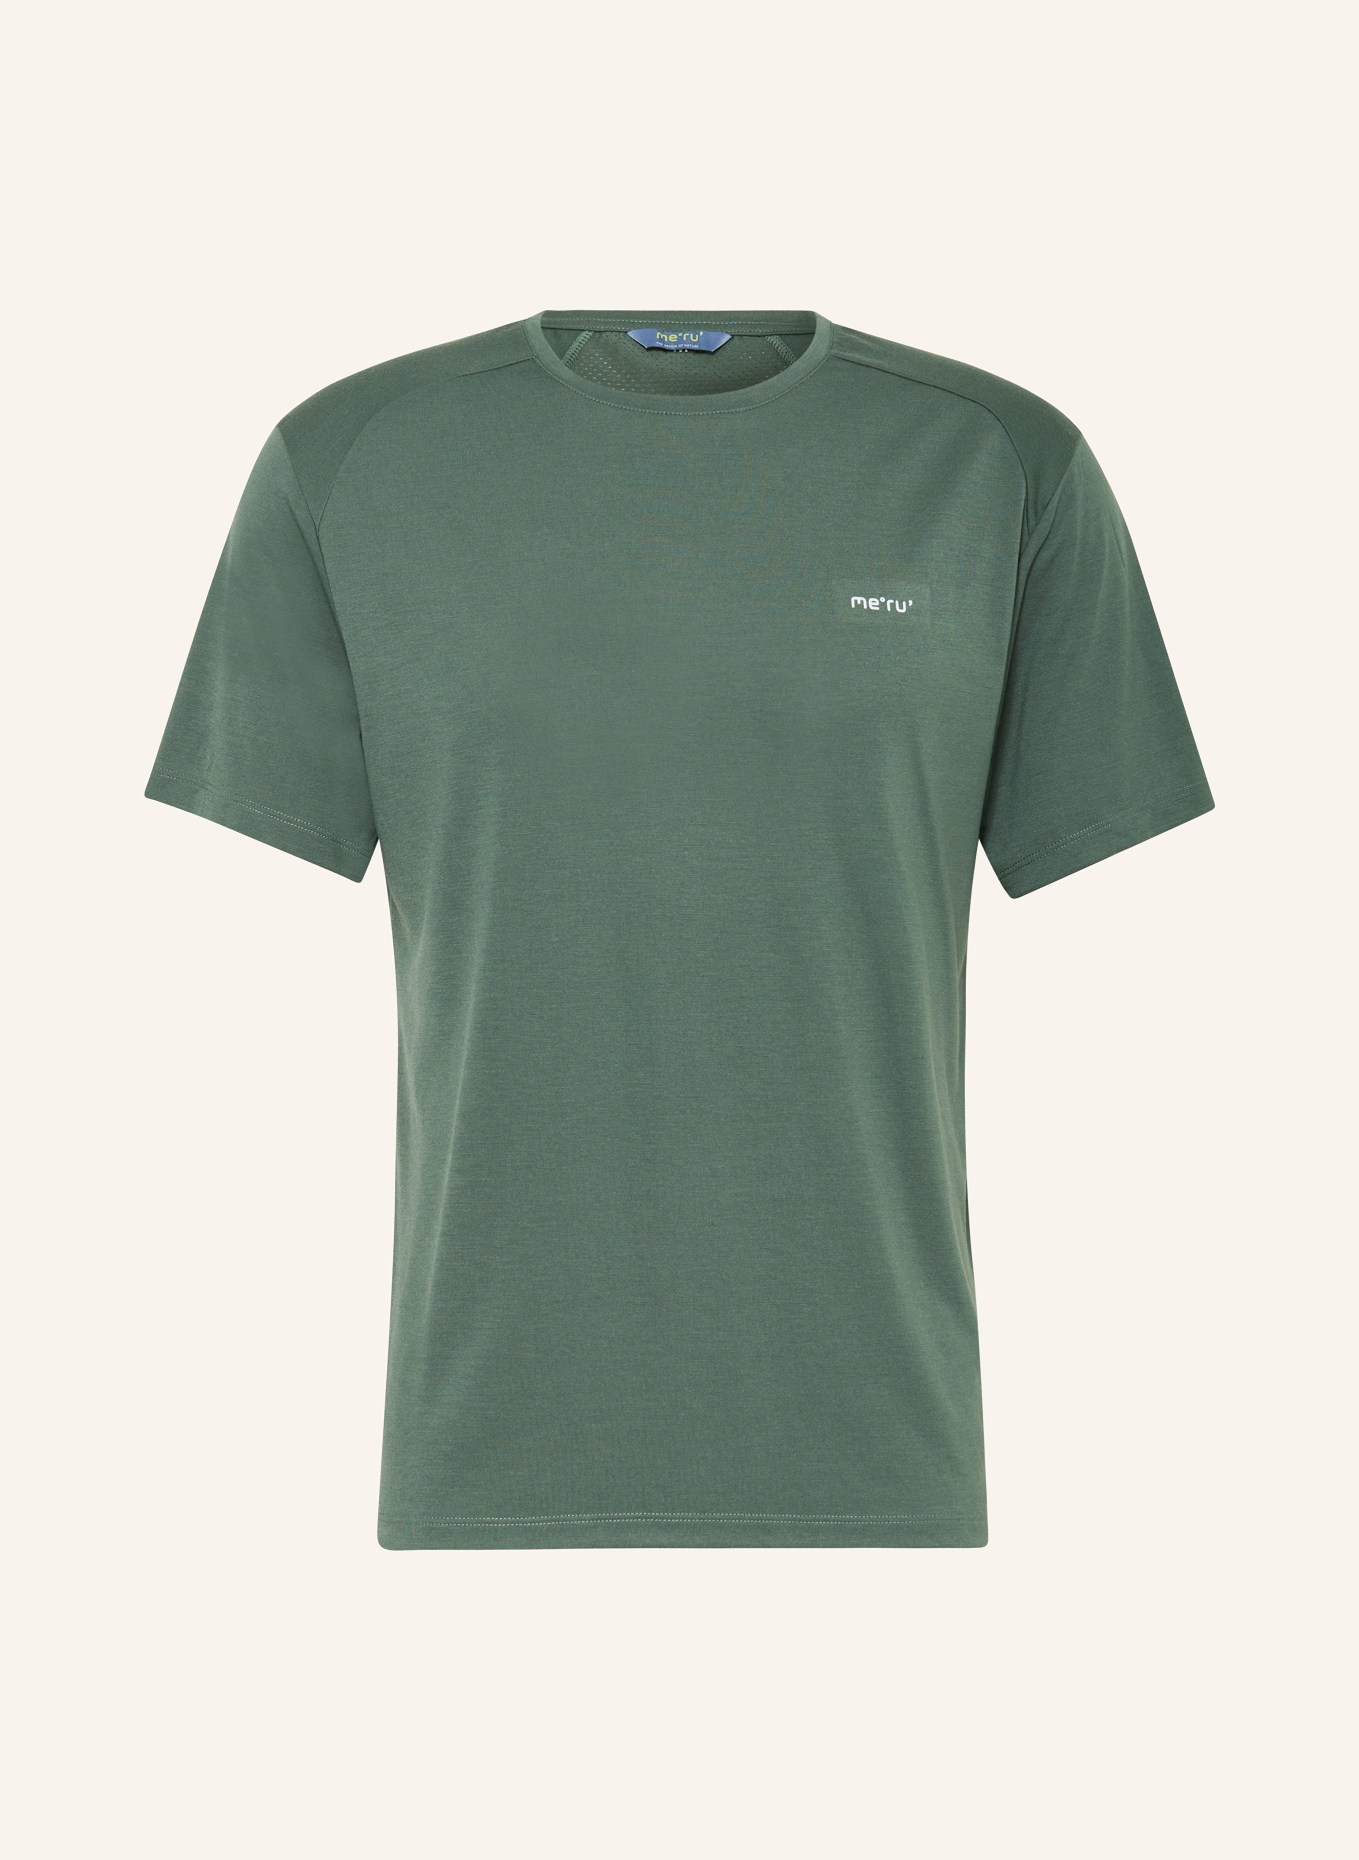 me°ru' T-Shirt LAMEGO, Farbe: GRÜN (Bild 1)